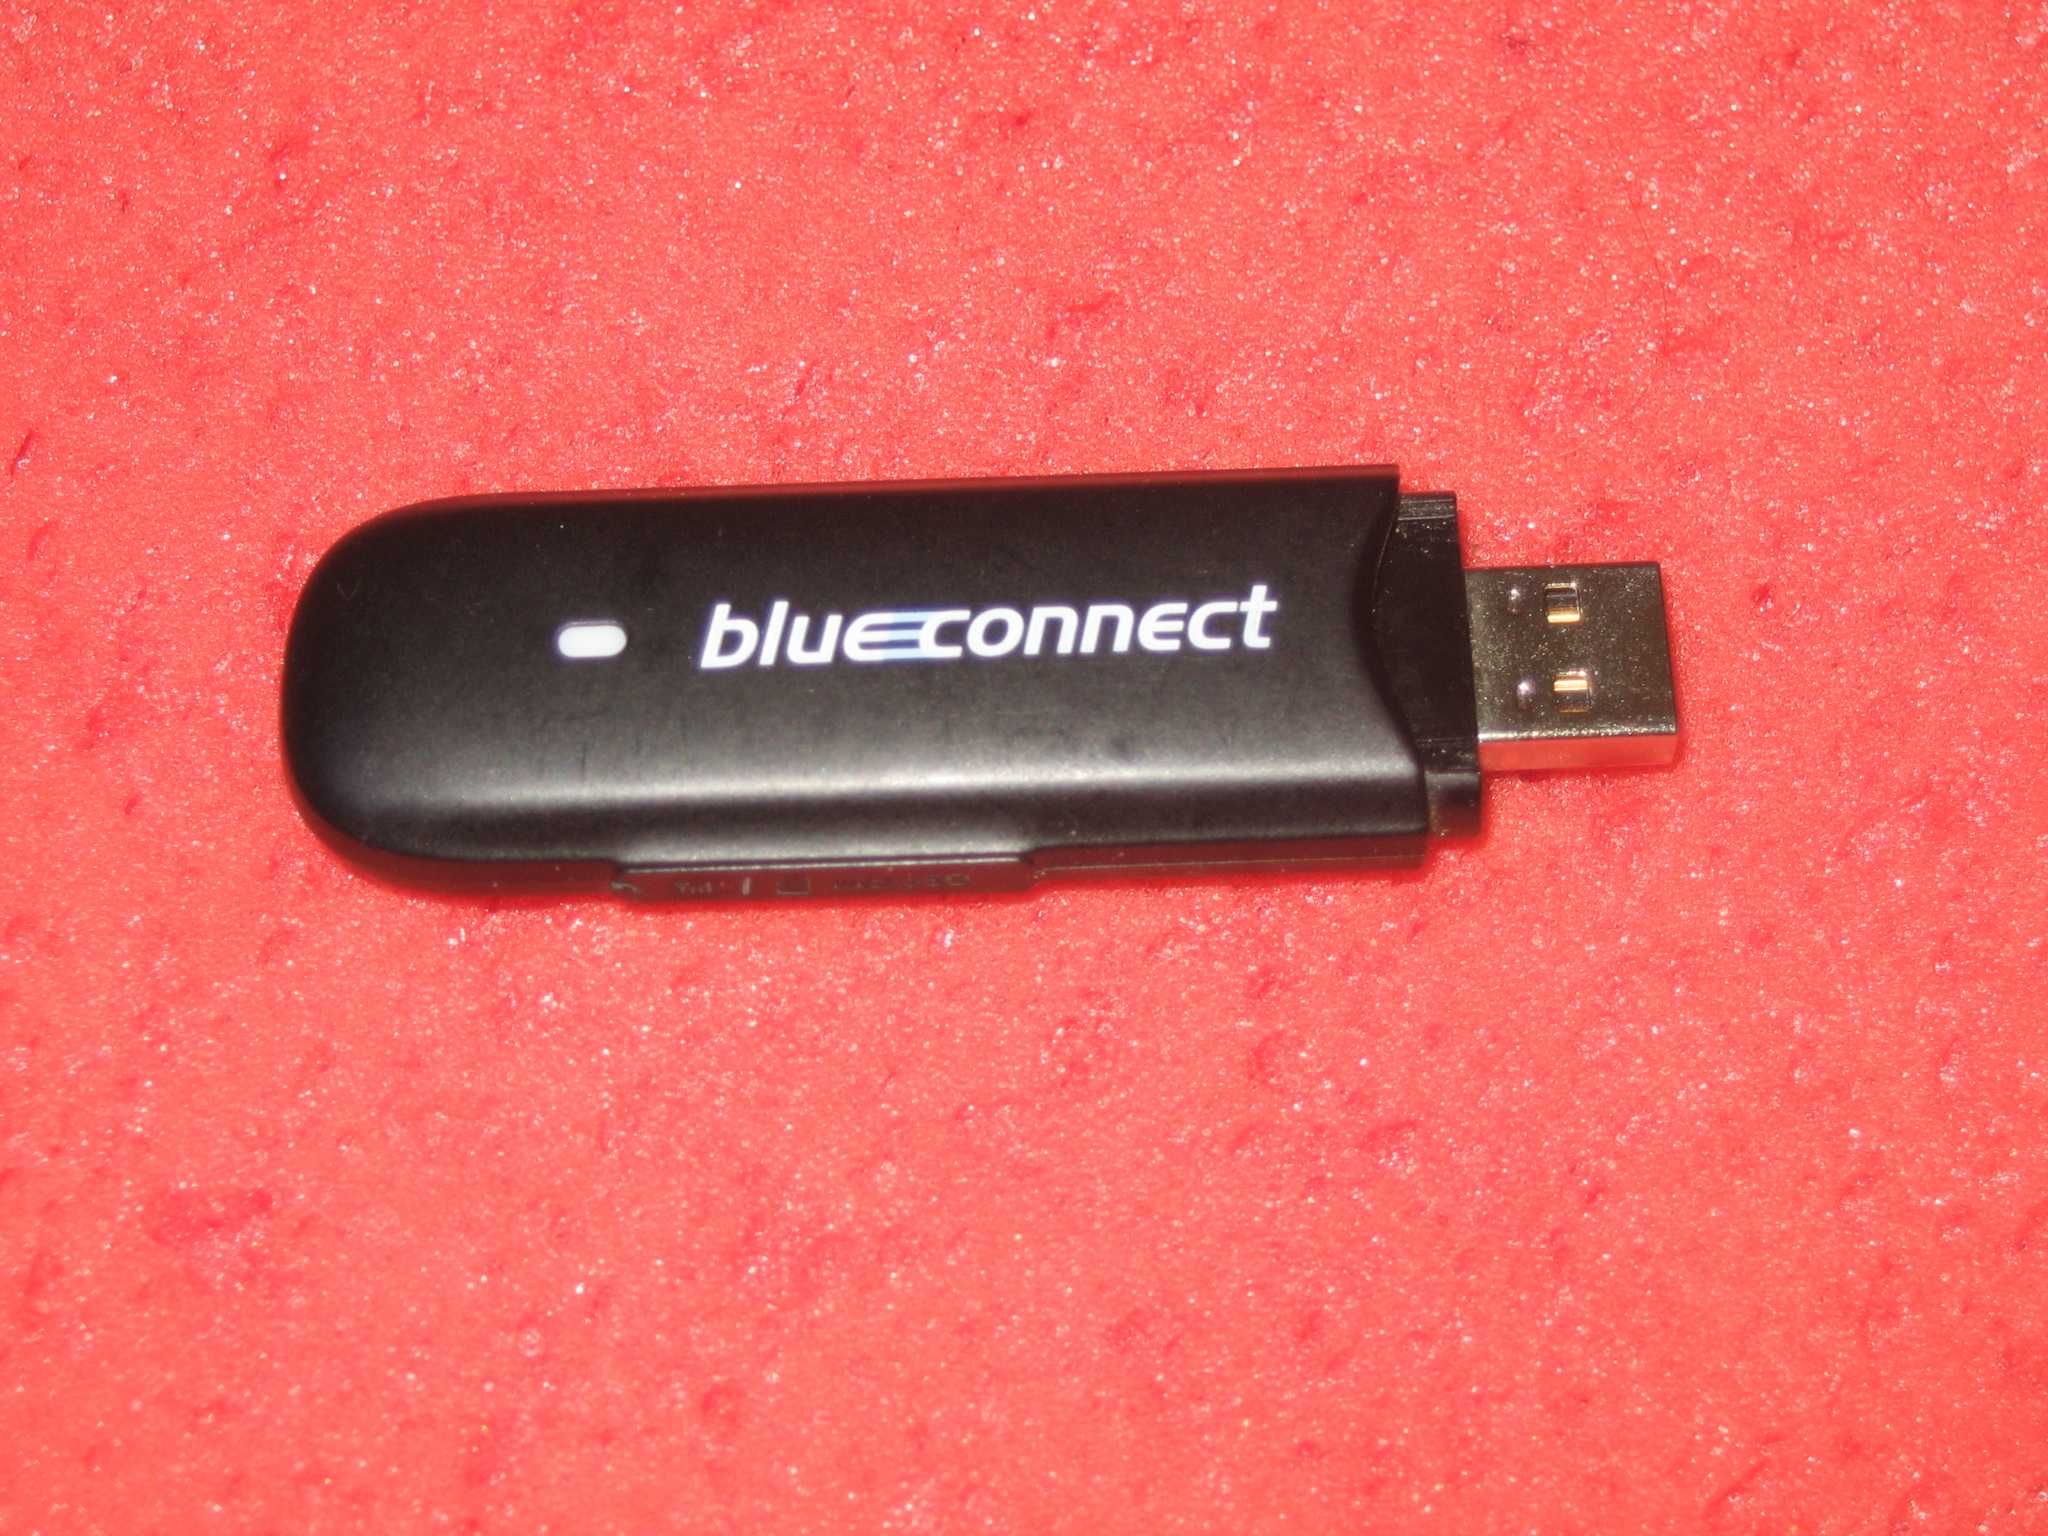 Komplet - Modem Blueconnect Huawei E122 (USB) + E630 (PCMCIA)